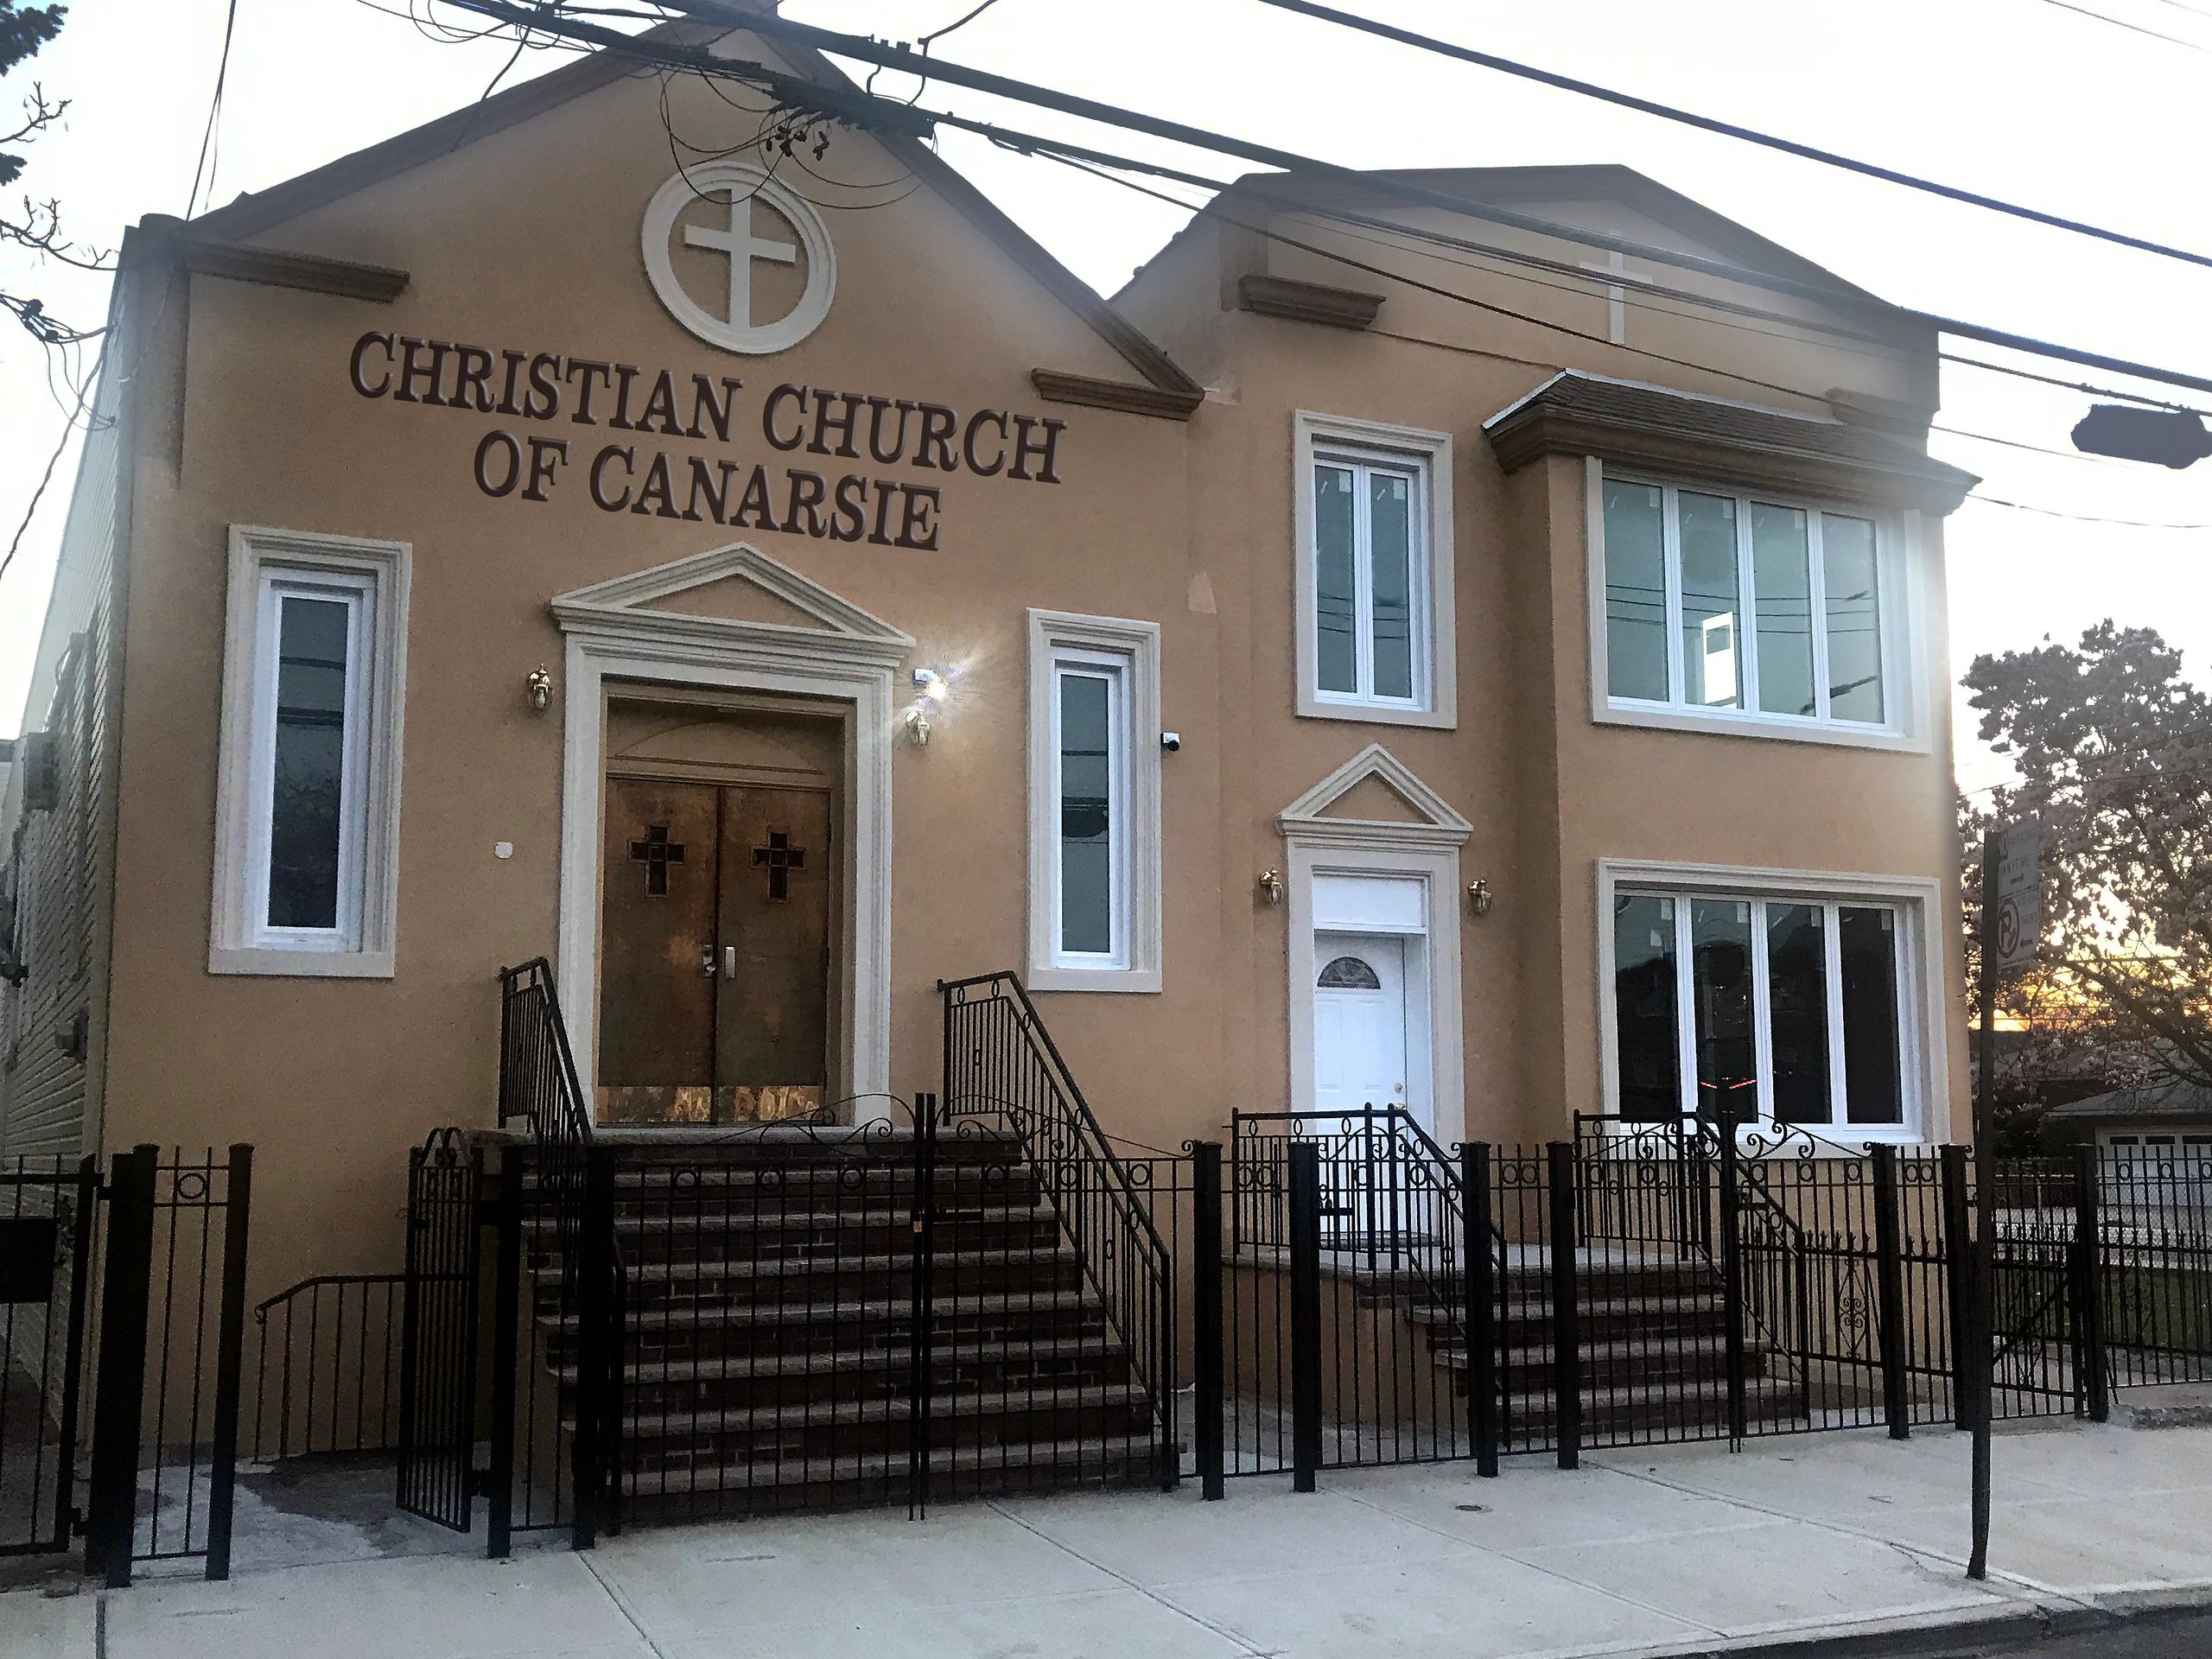 Christian Church of Canarsie Building